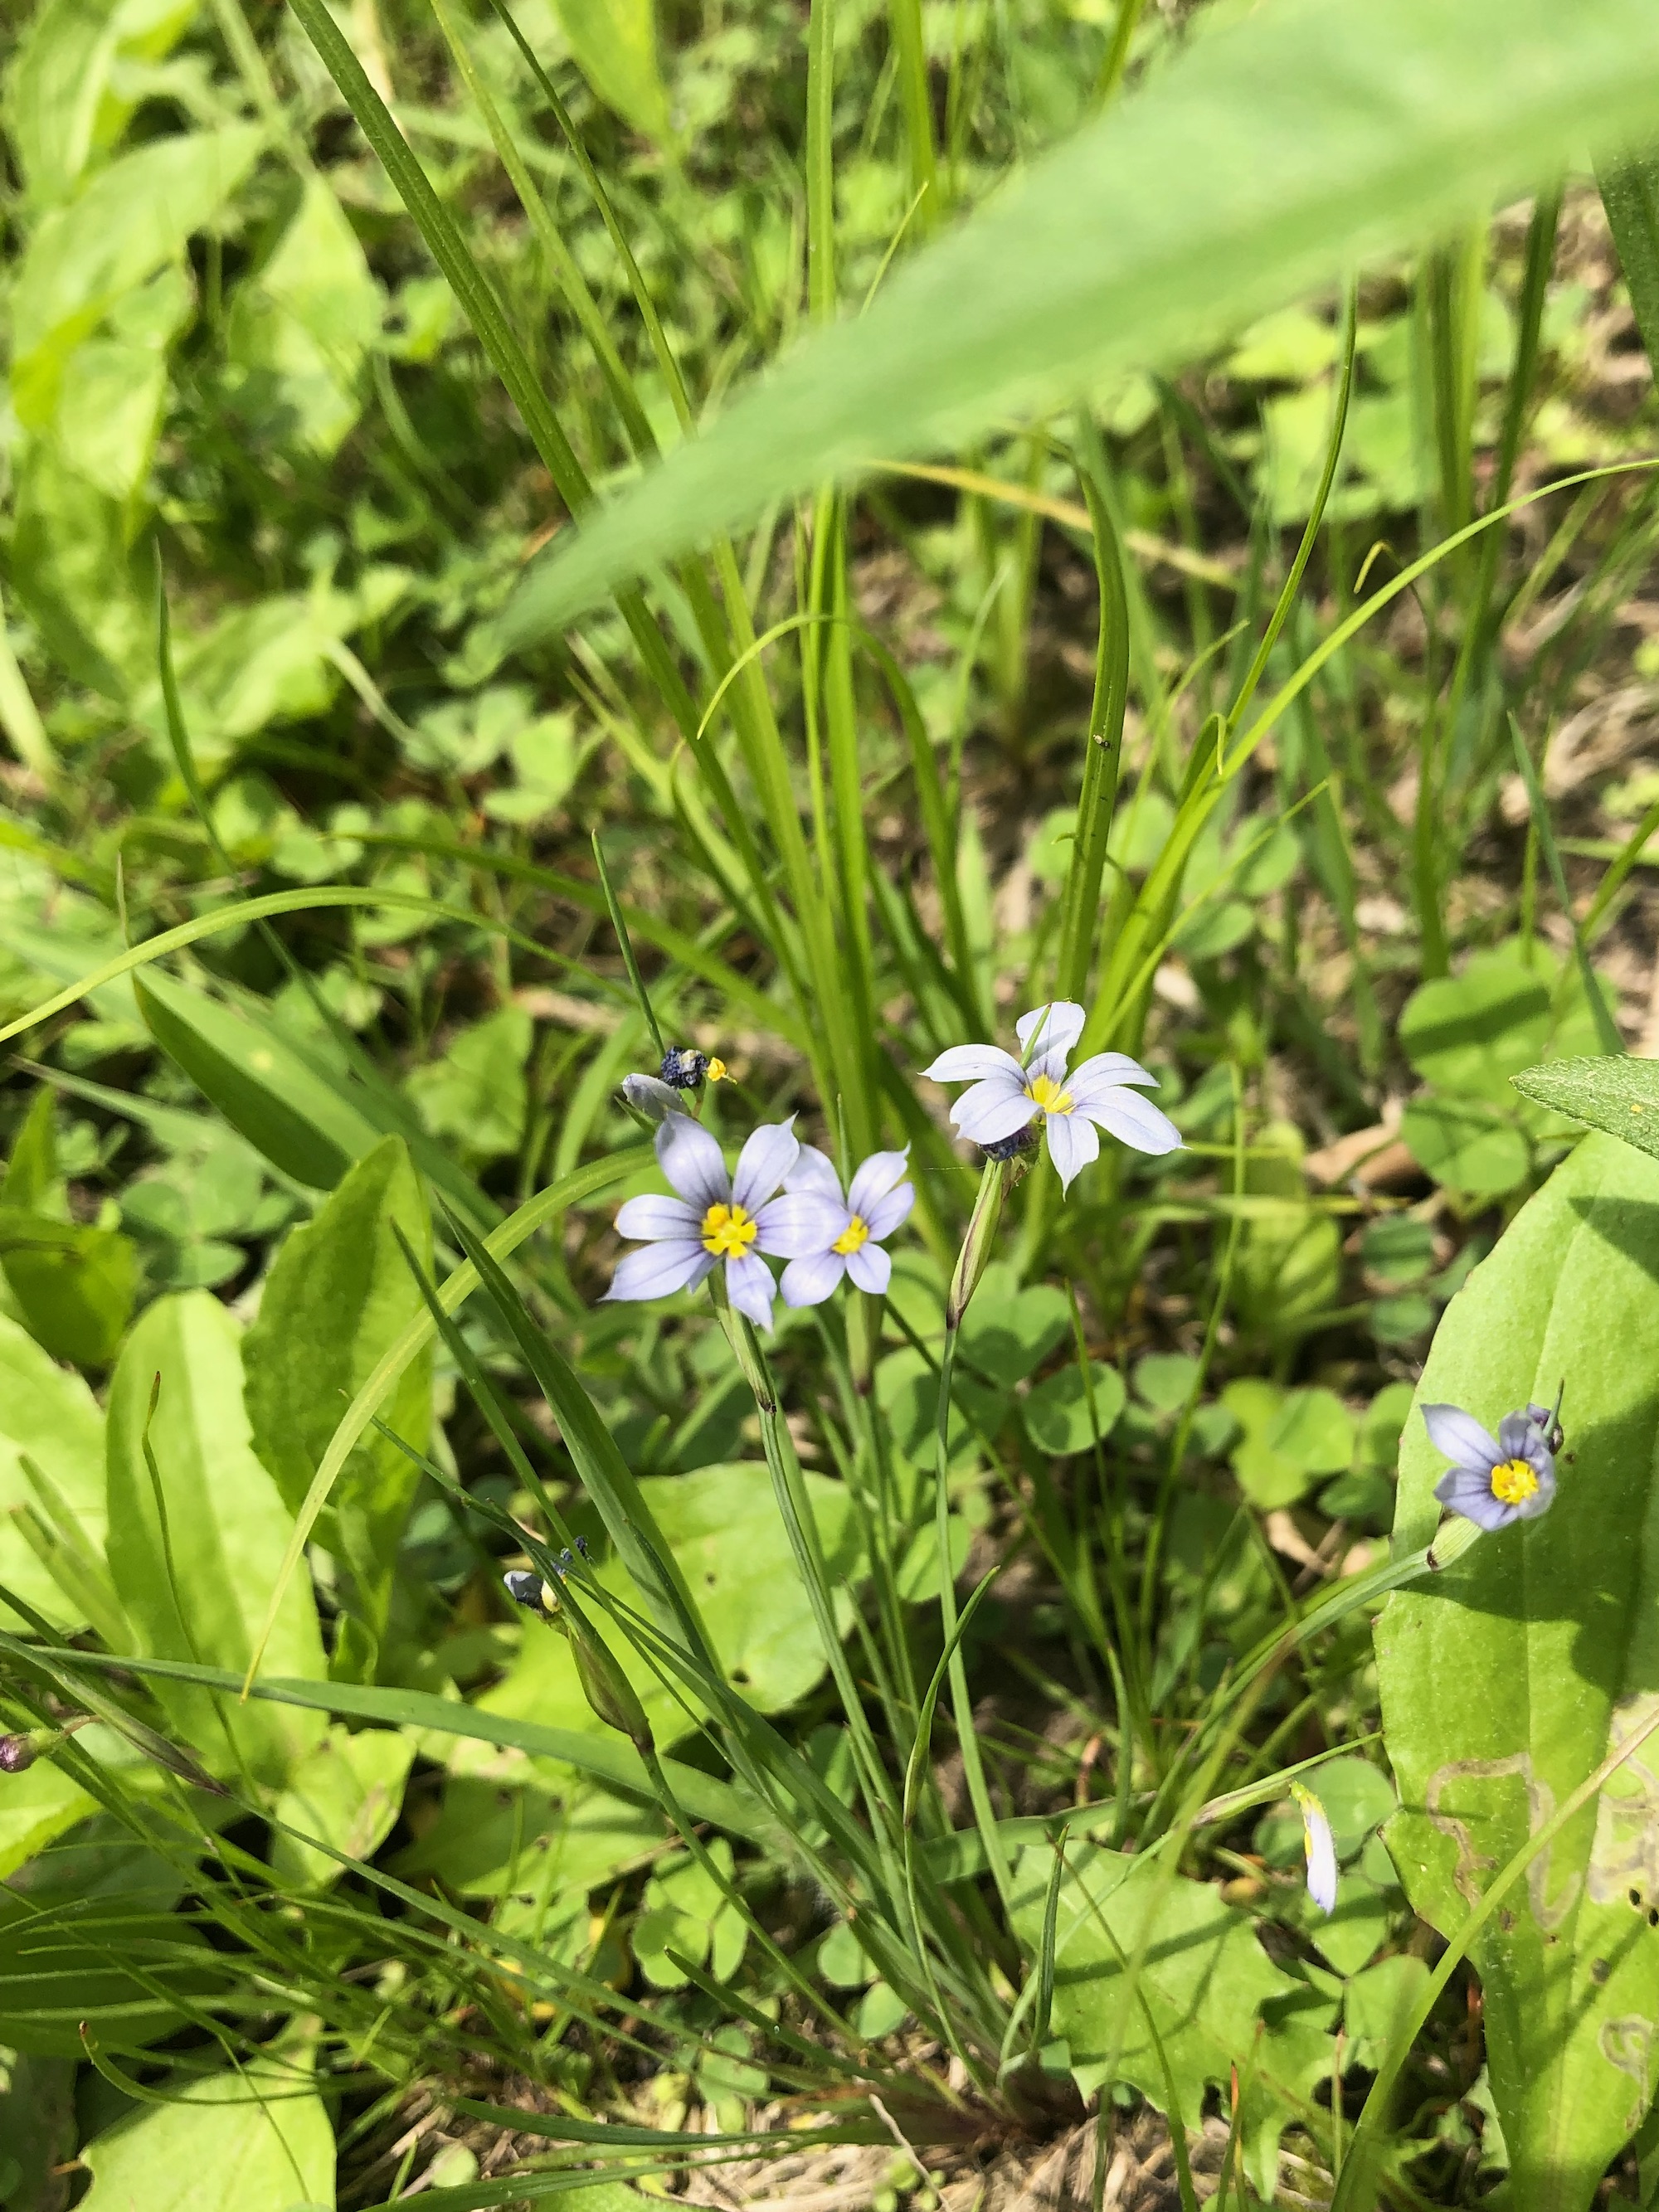 Blue-eyed Grass in UW Arbortetum-Madison Curtis Prairie in Madison, Wisconsin on May 30, 2022.